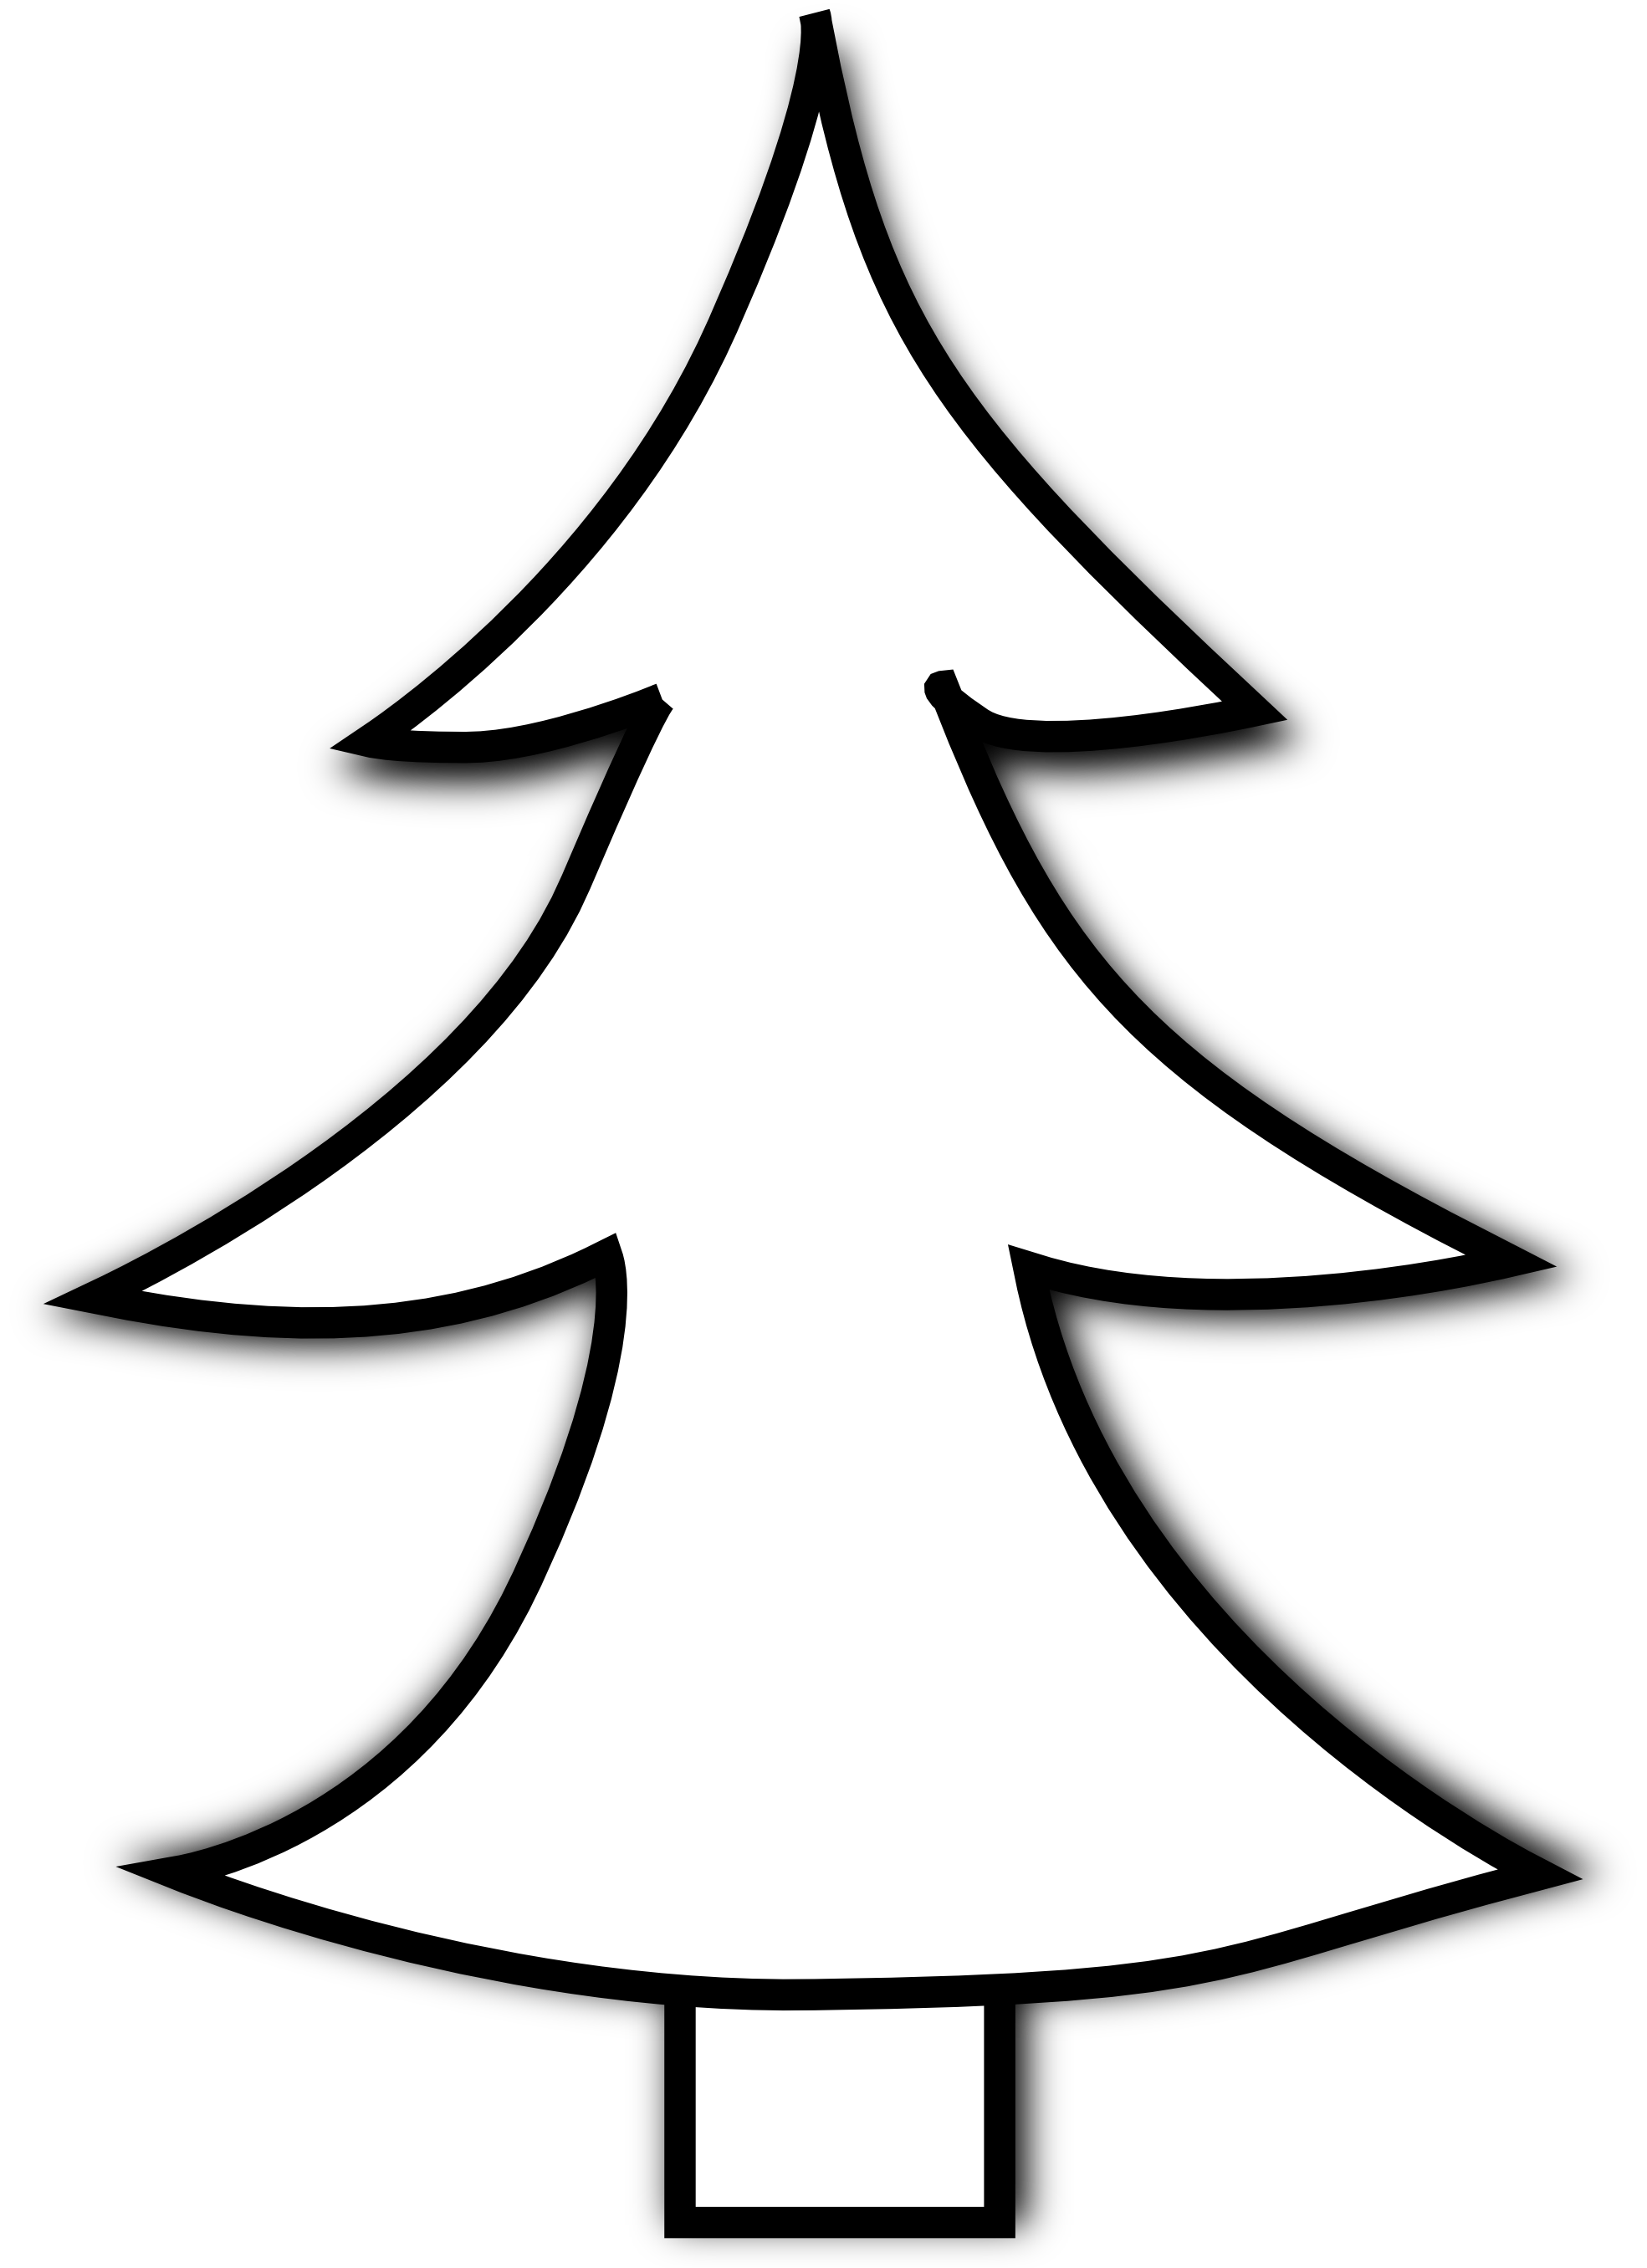 Christmas tree clip art free black and white